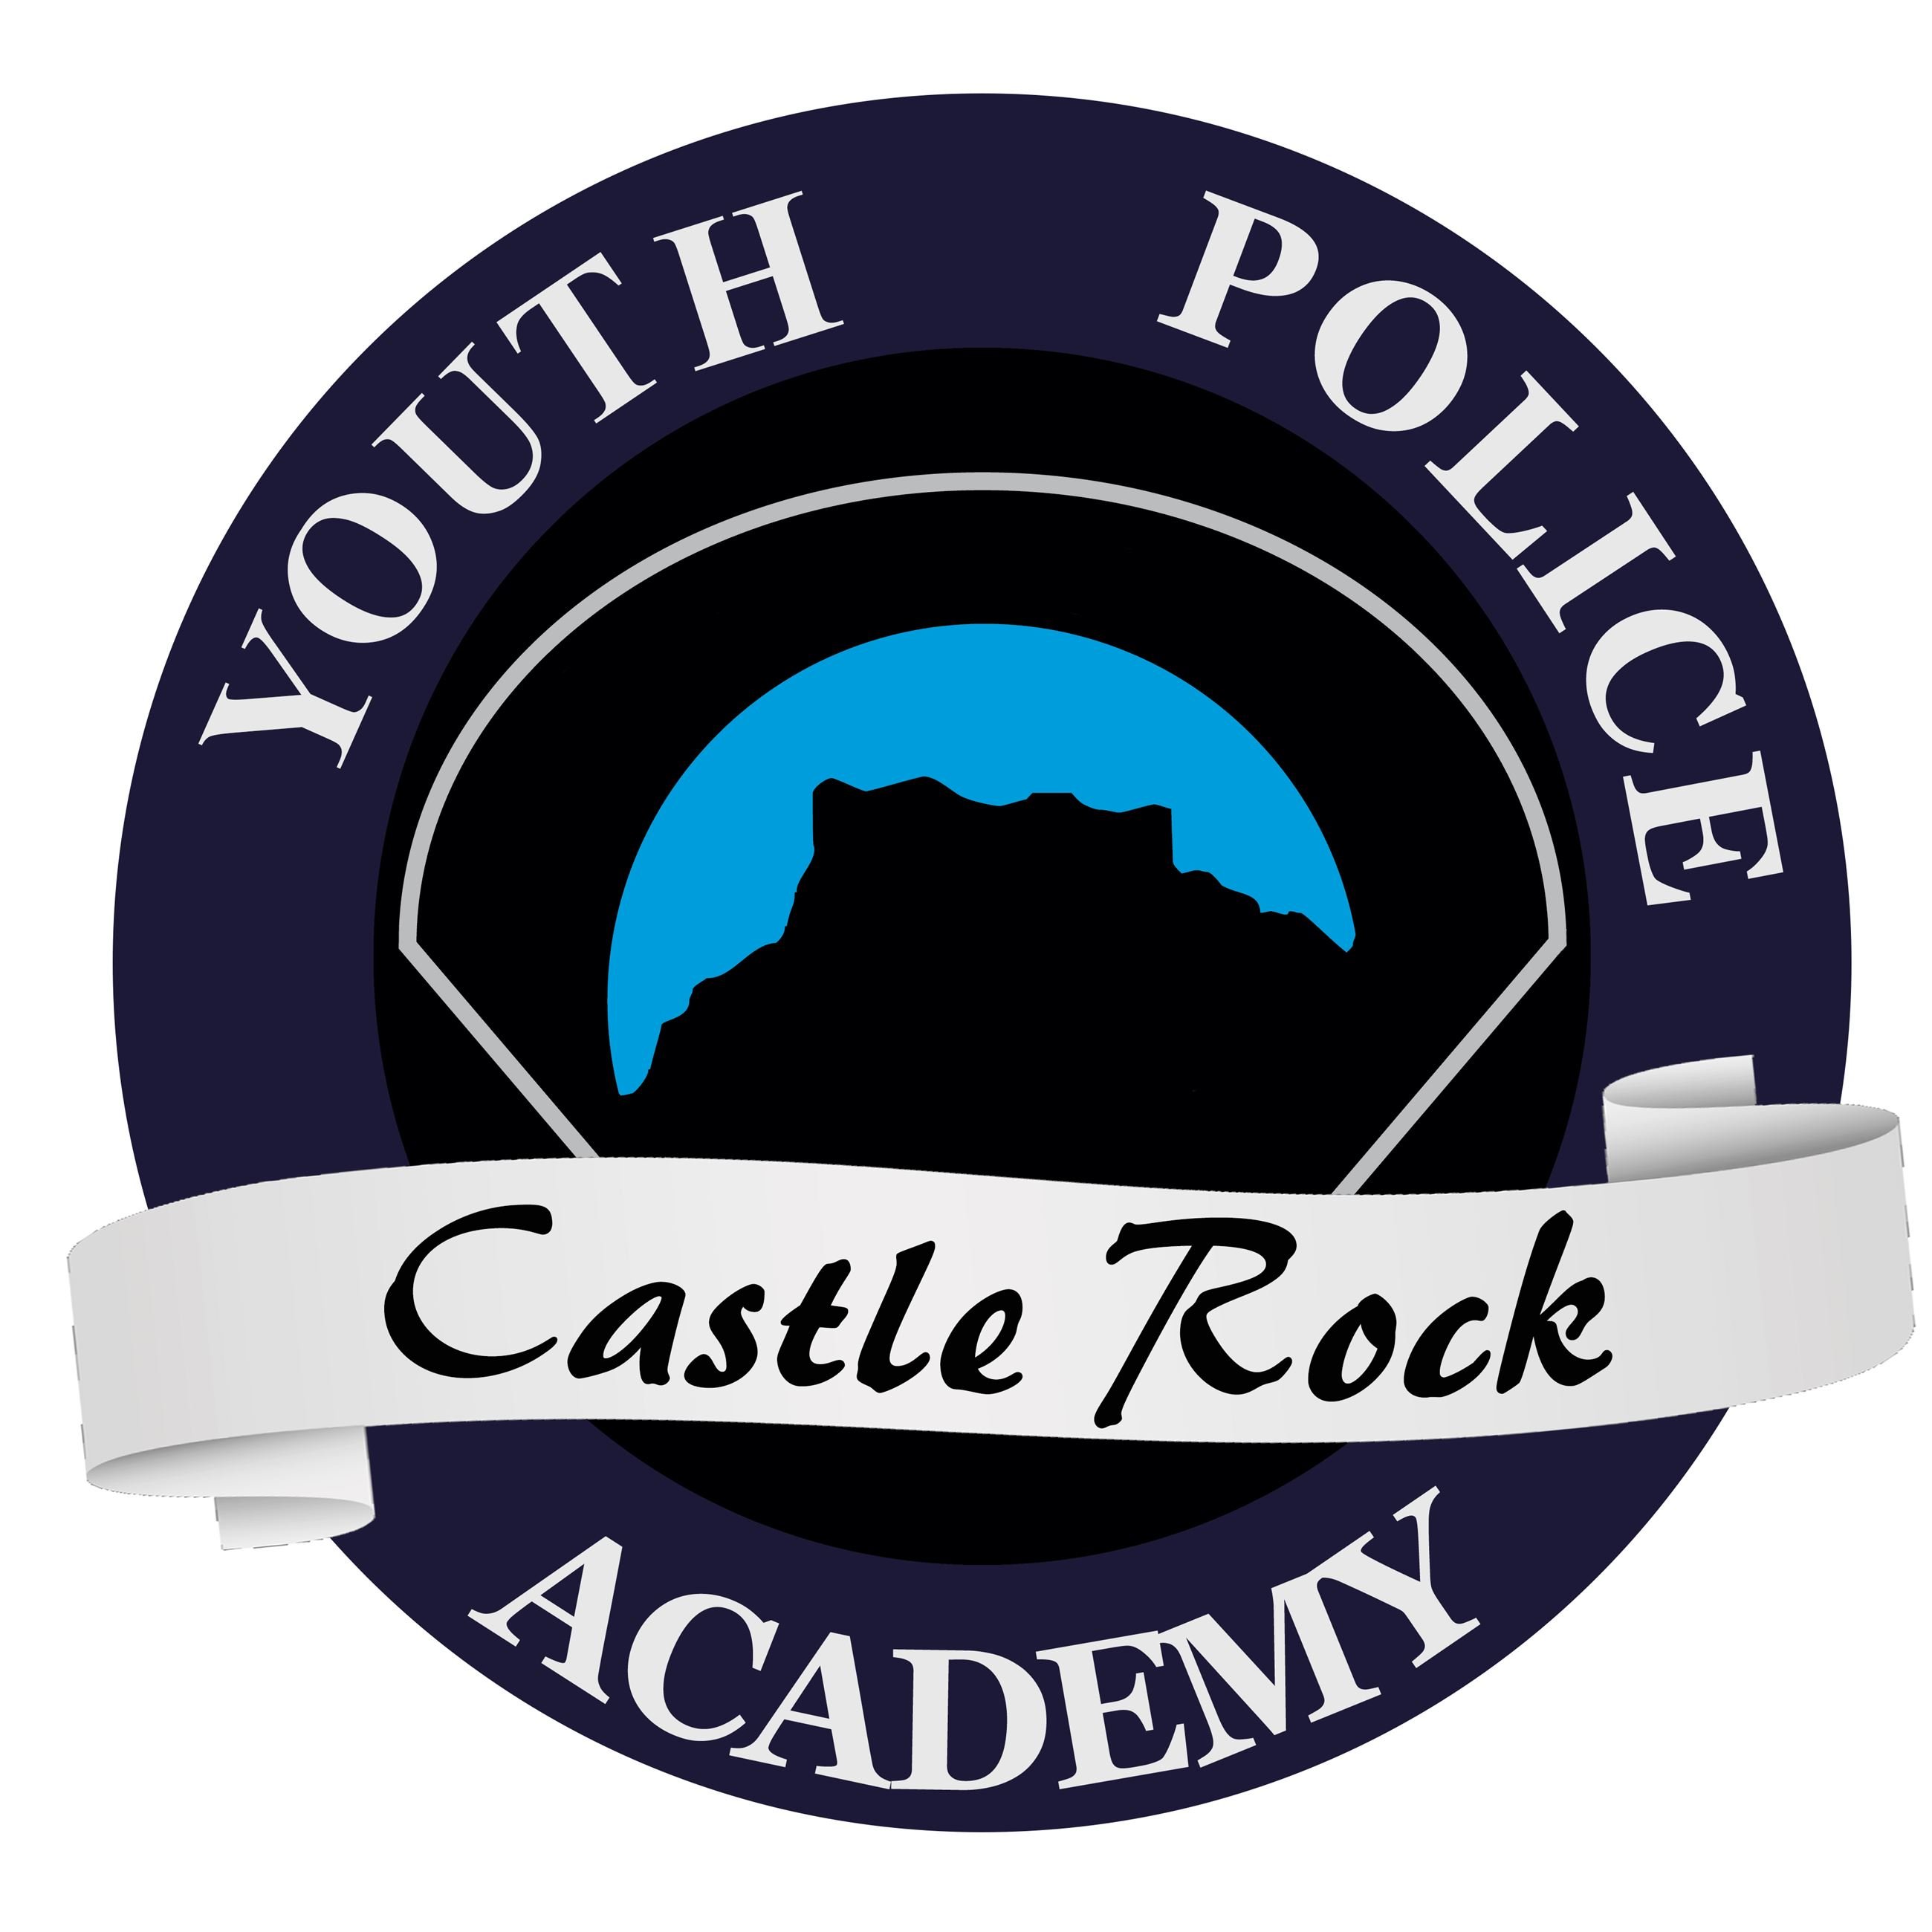 Youth Police Academy logo